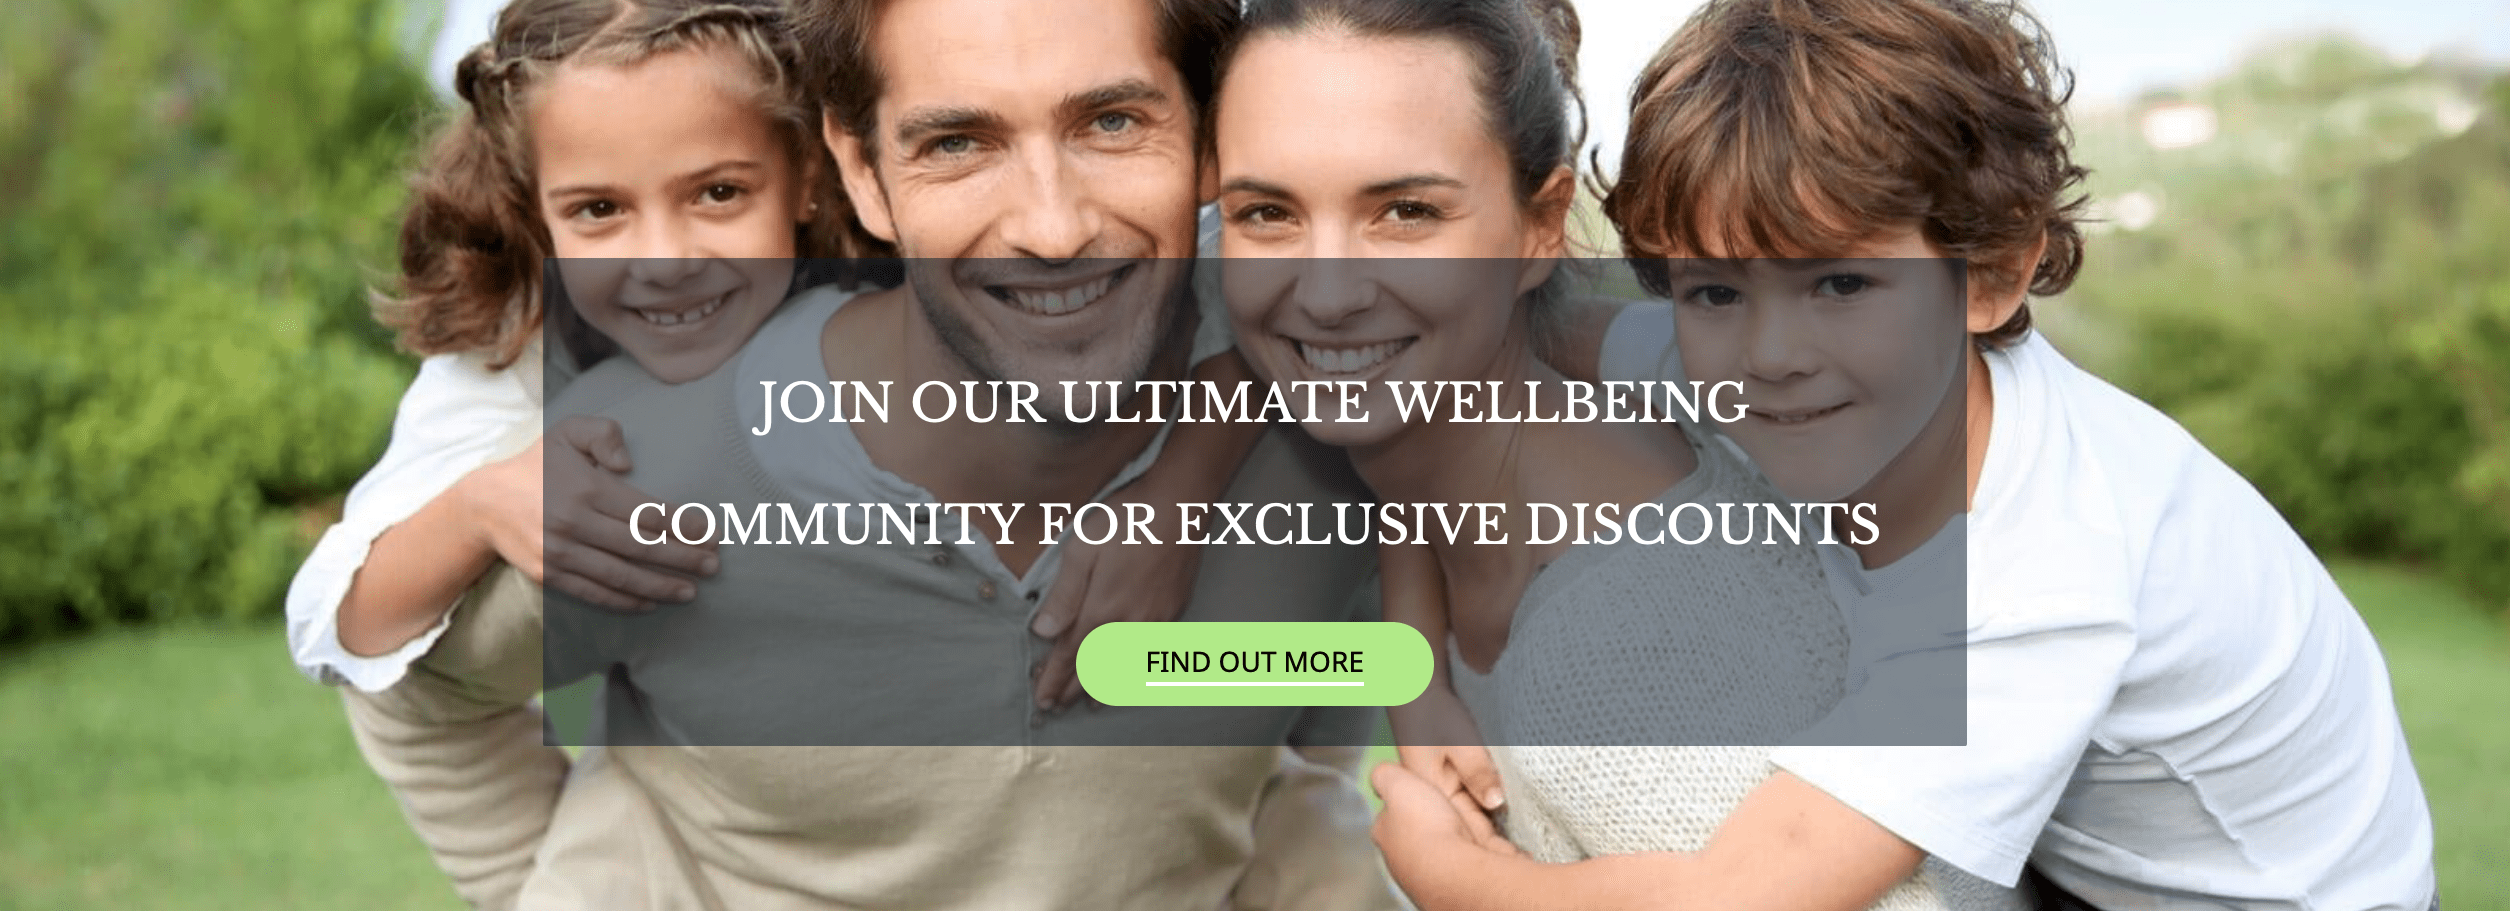 Wellbeing Community